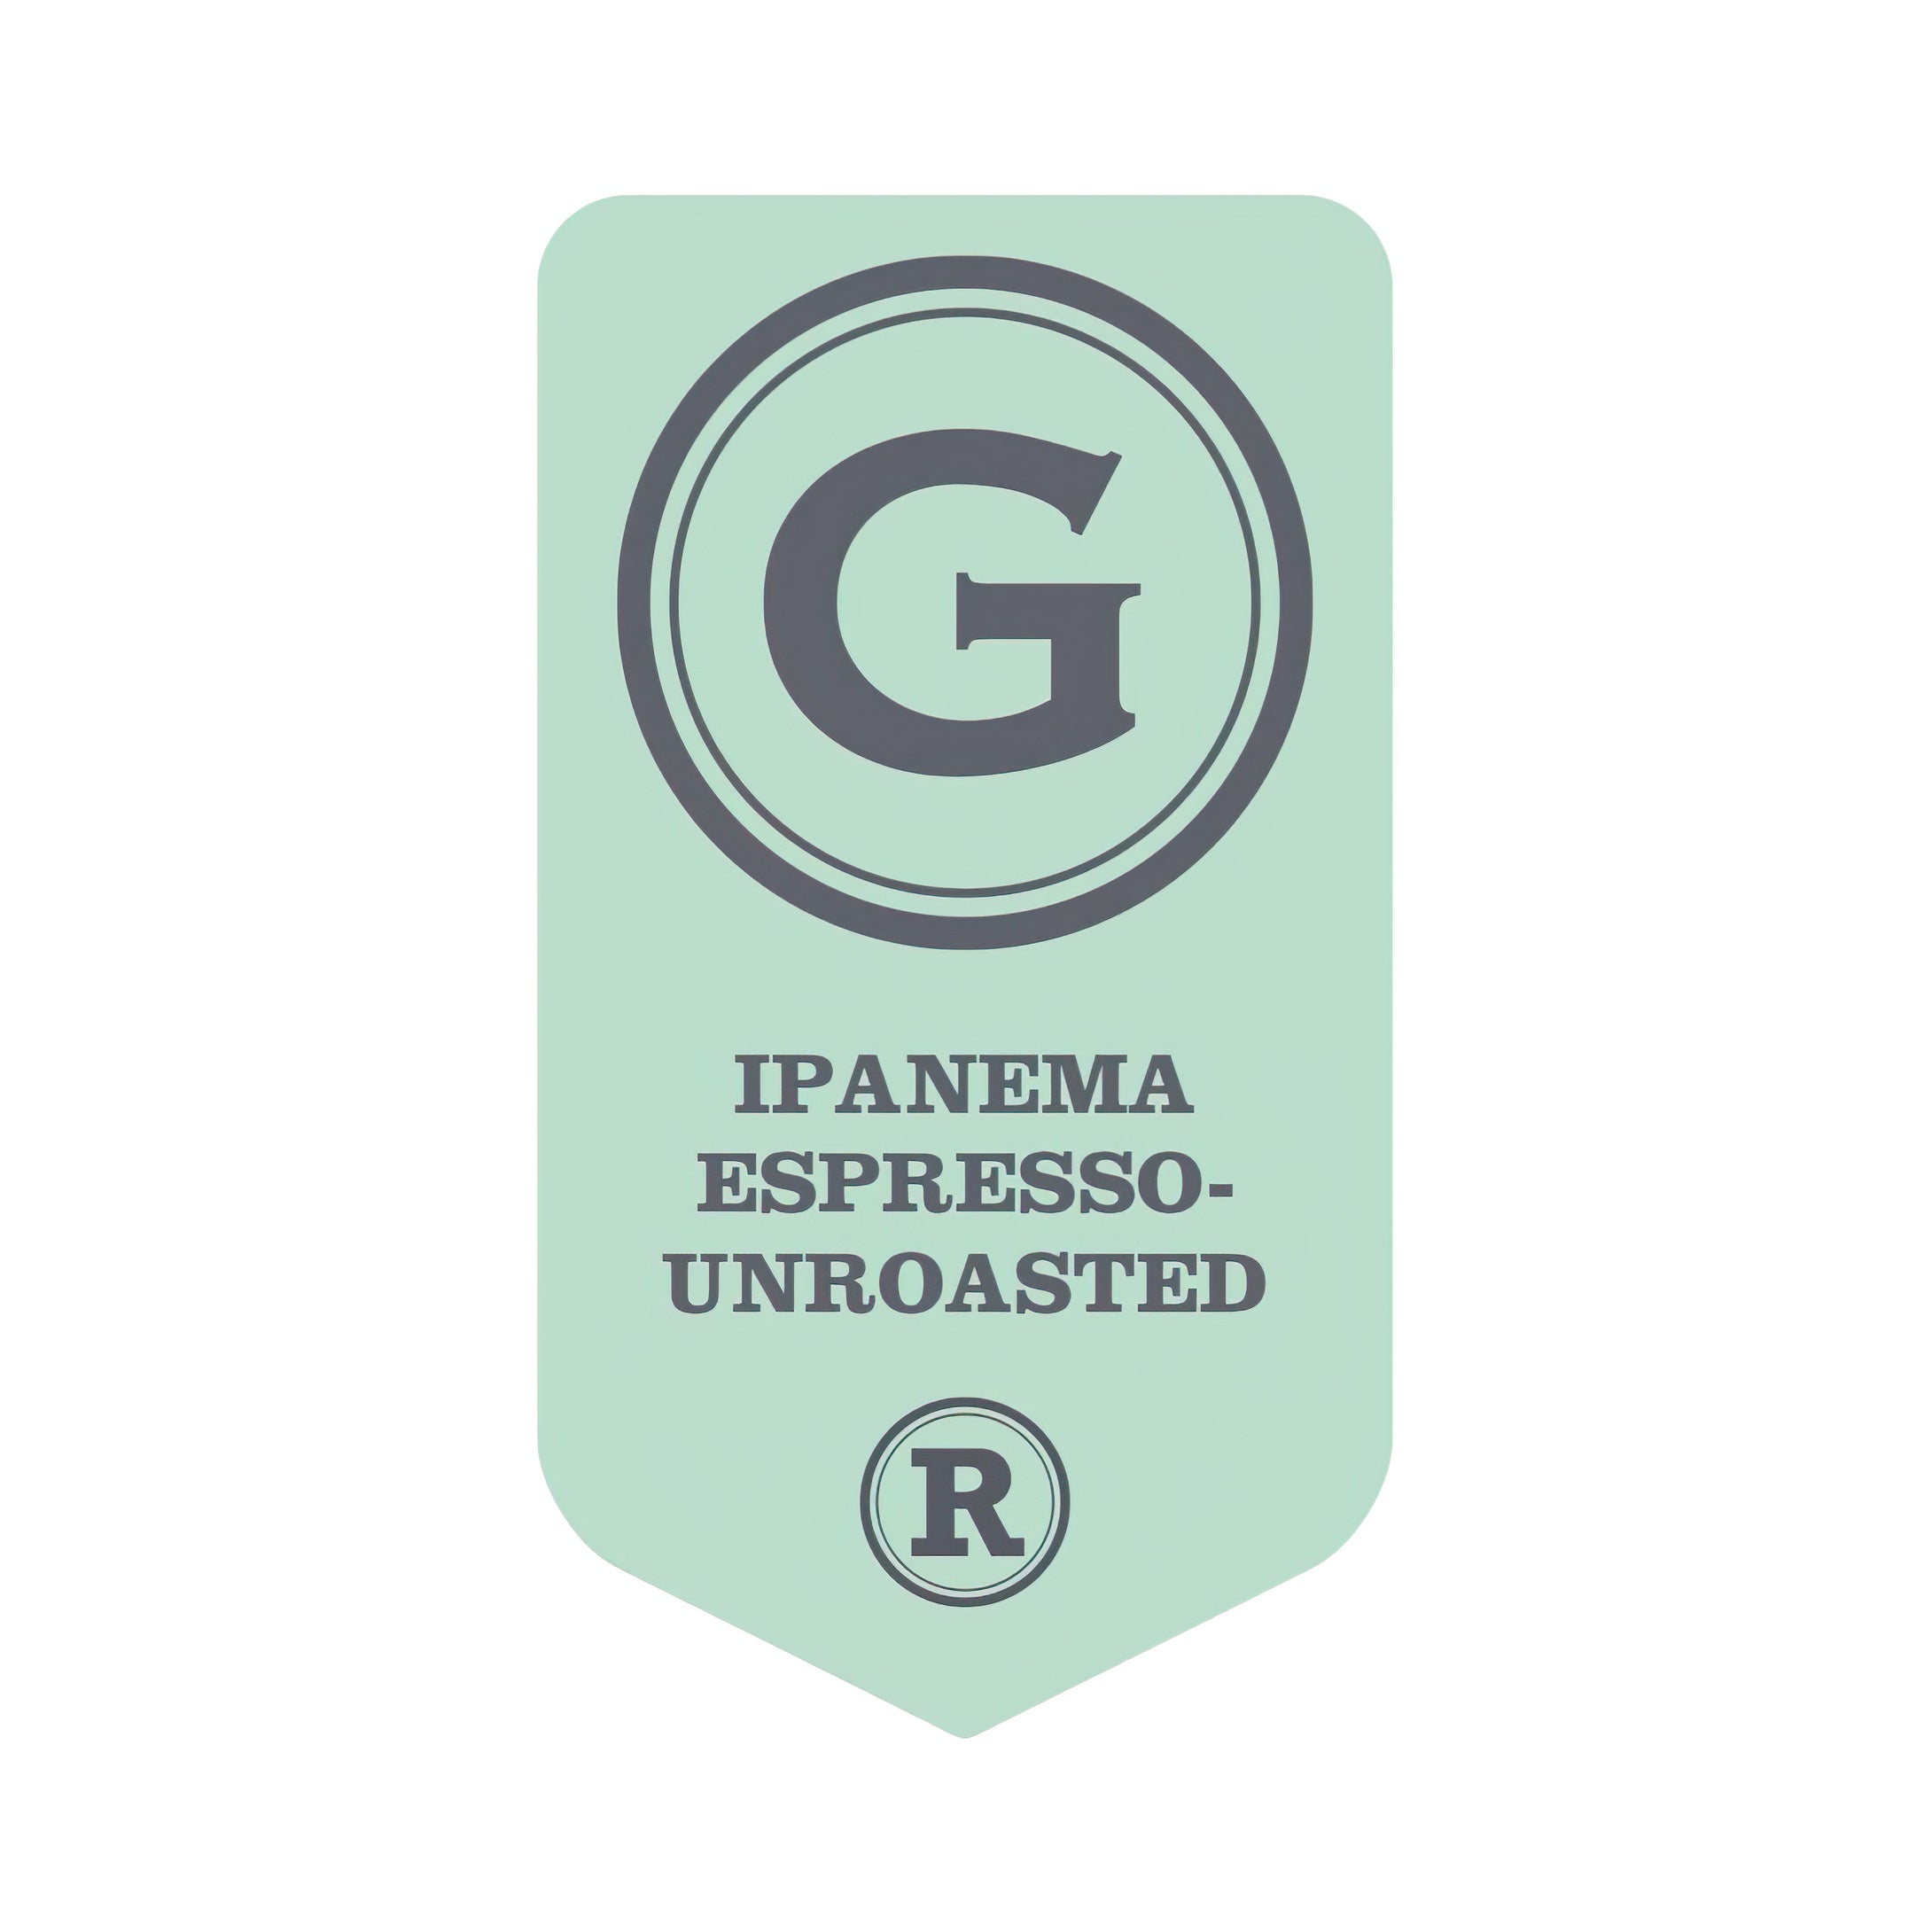 Ipanema Espresso - RFA - UNROASTED